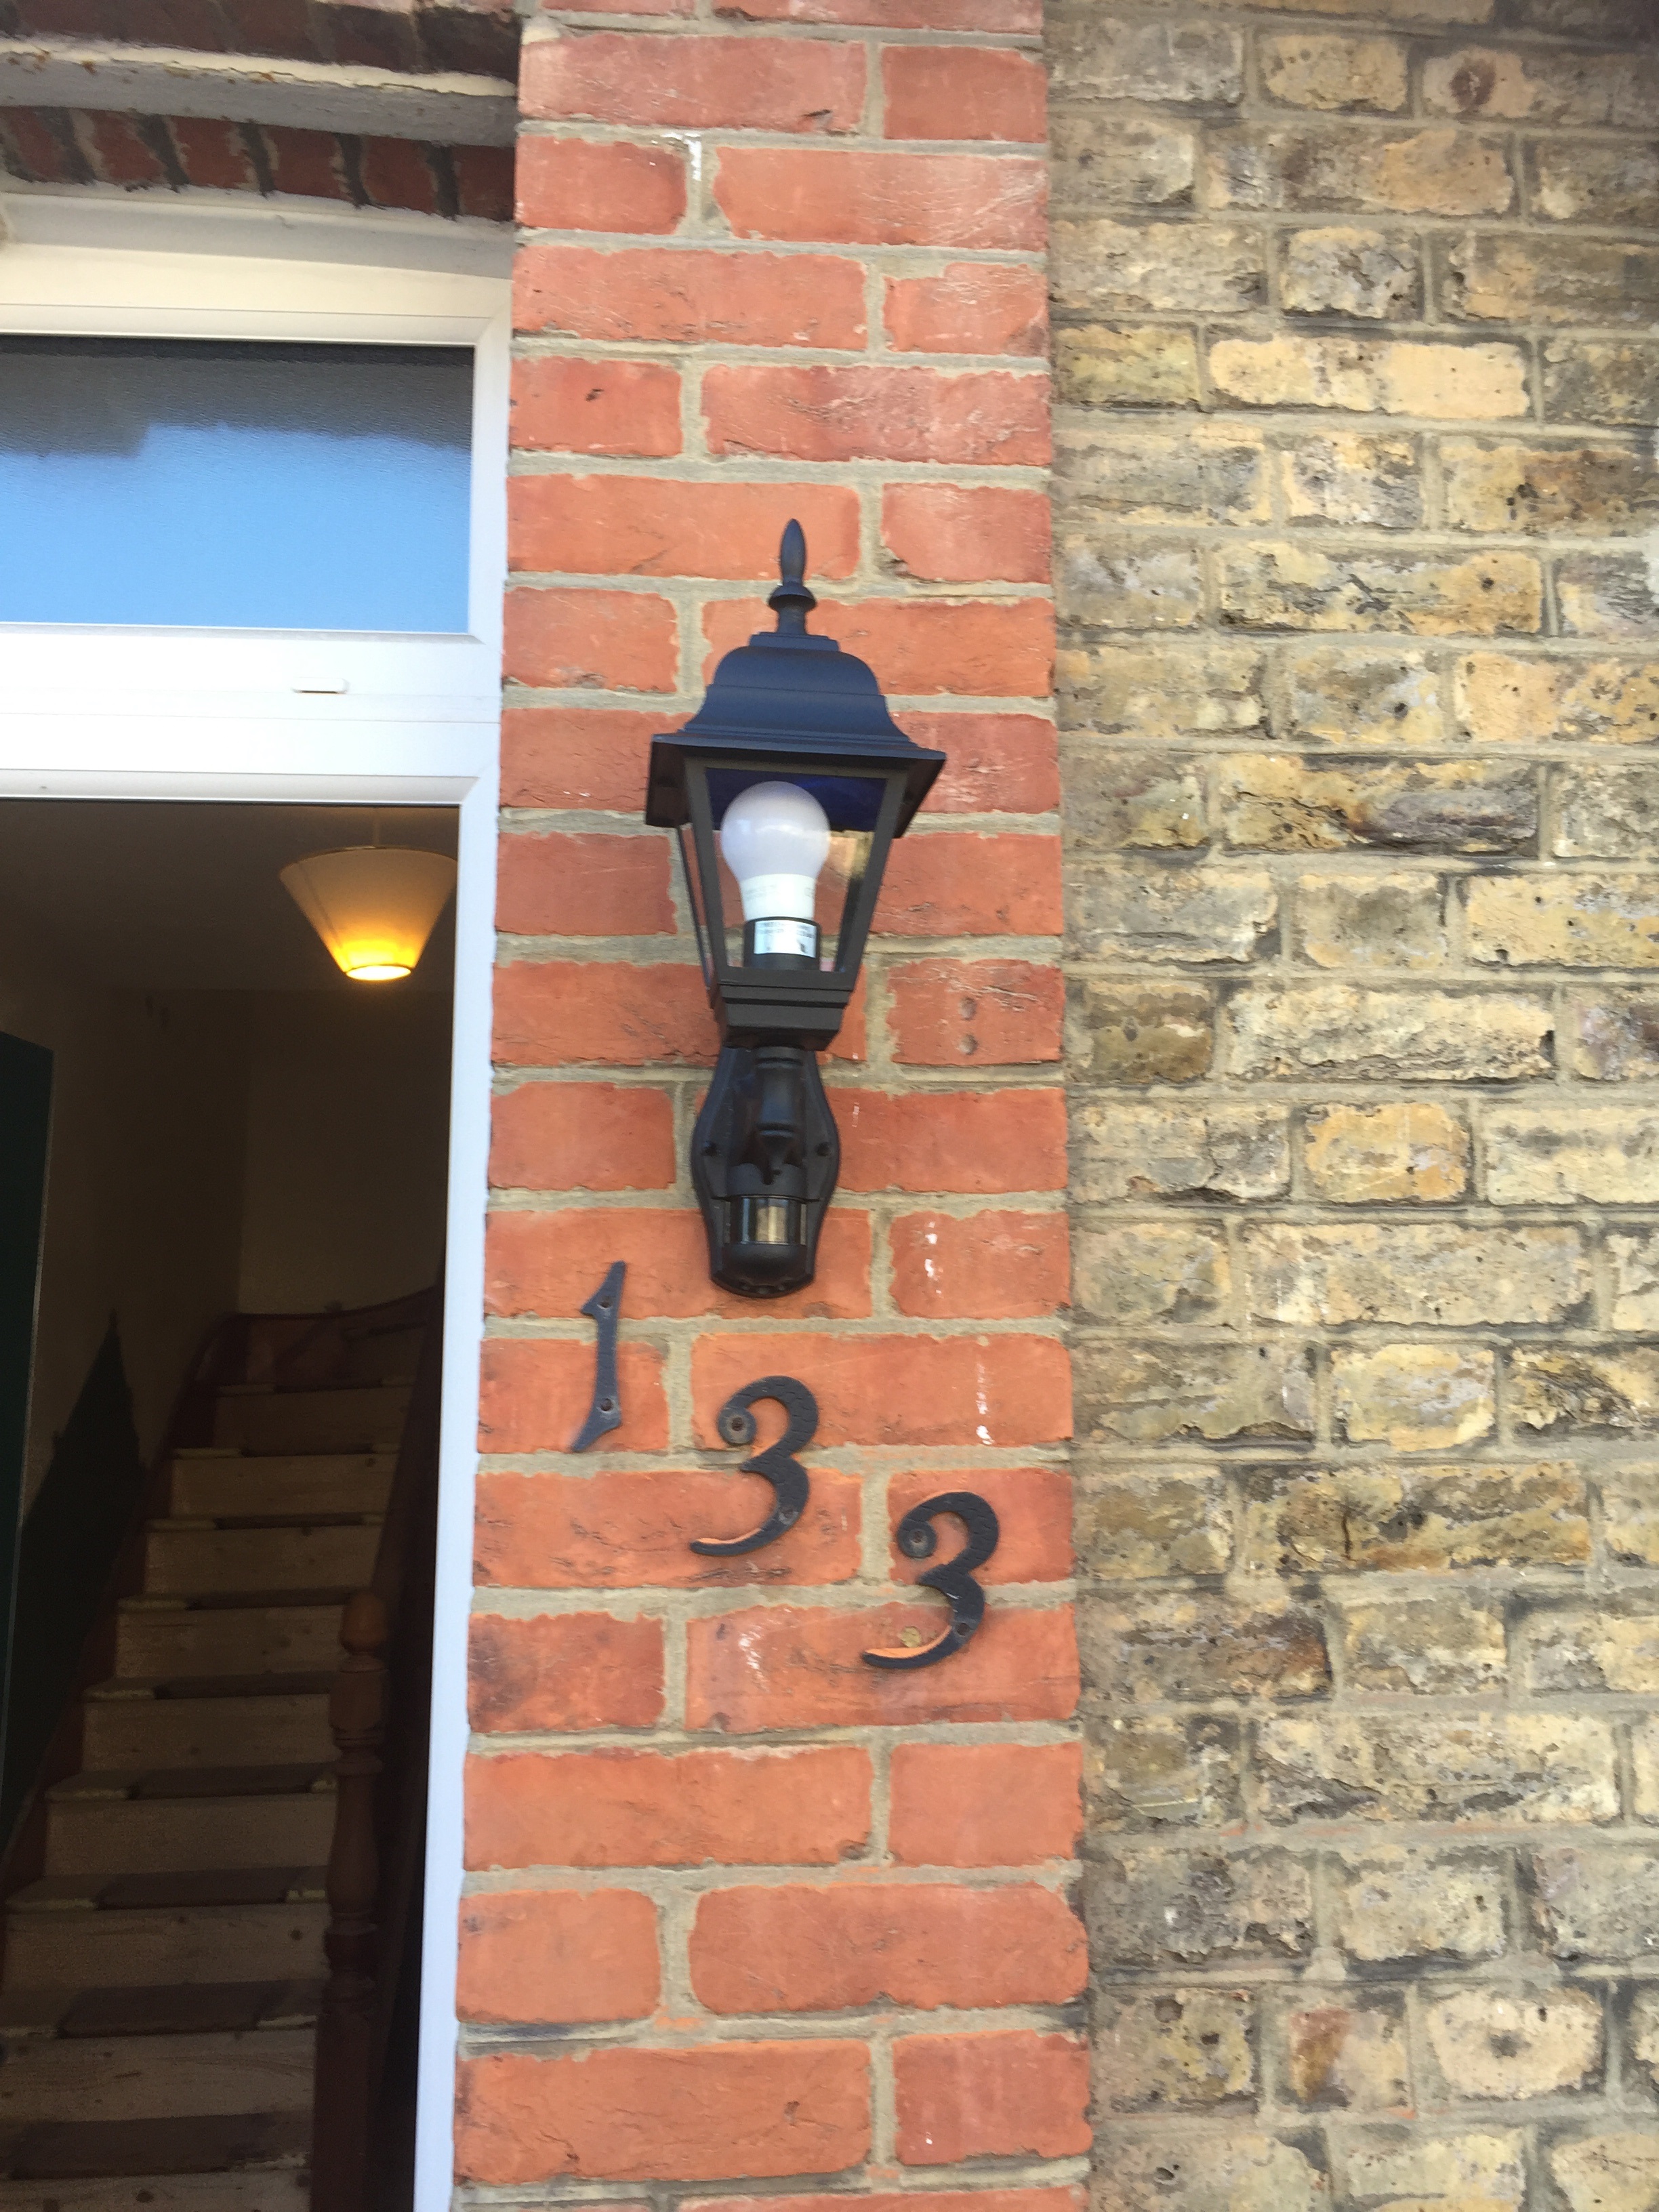 Lantern Wall Light Installed in Joydens Wood Bexley 